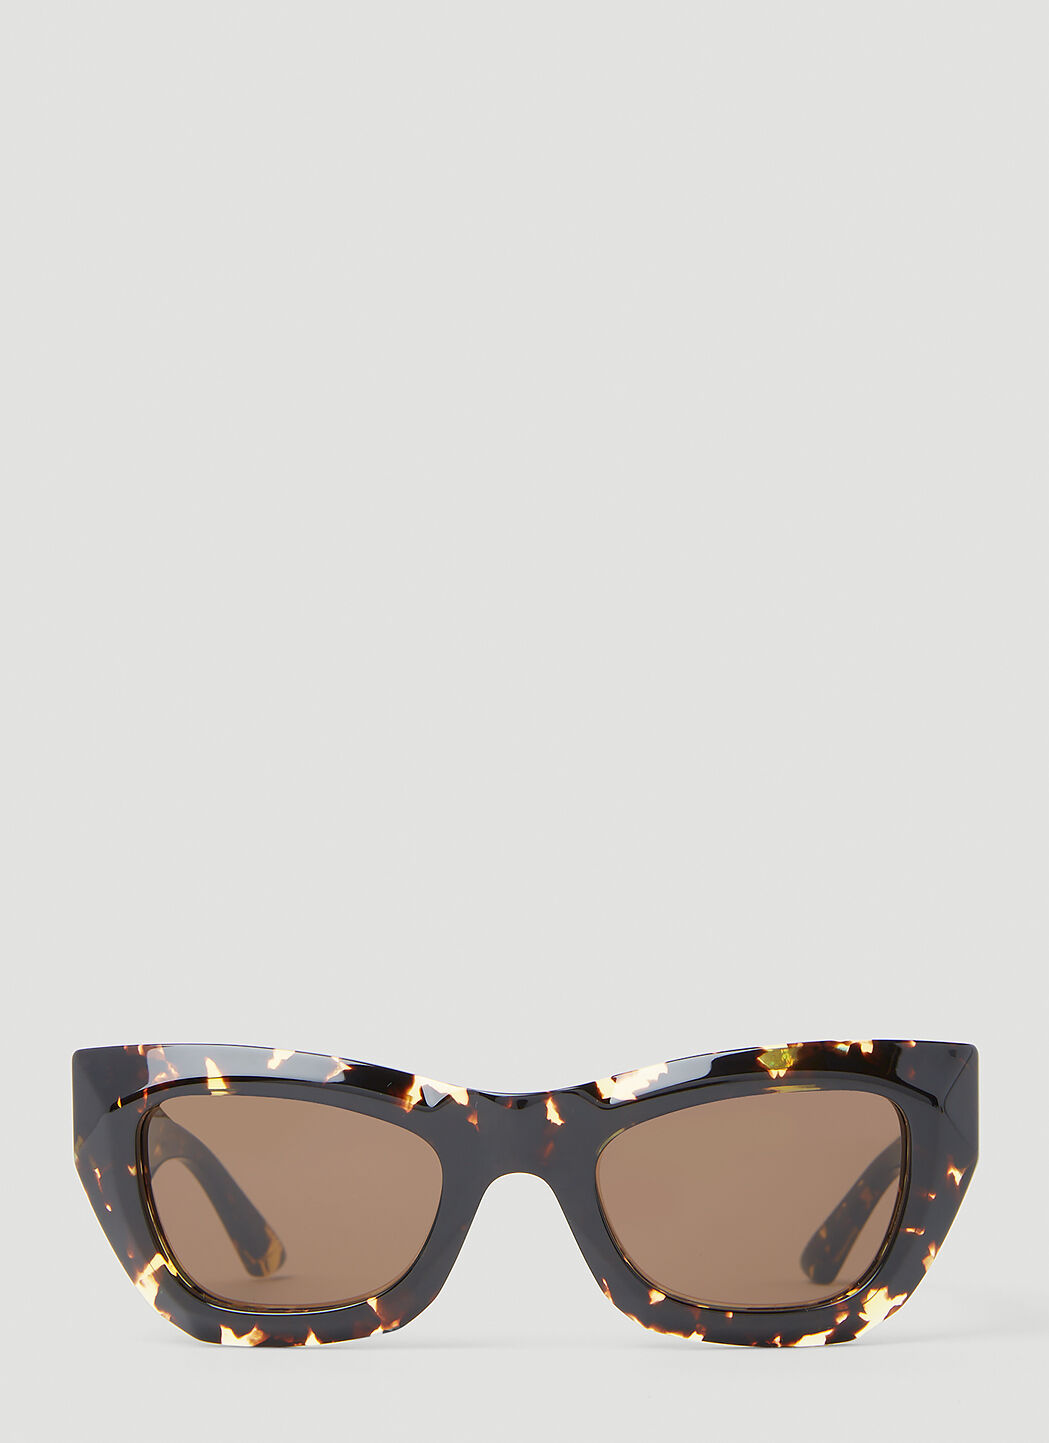 Saint Laurent Tortoiseshell Cat Eye Sunglasses Beige sla0253077